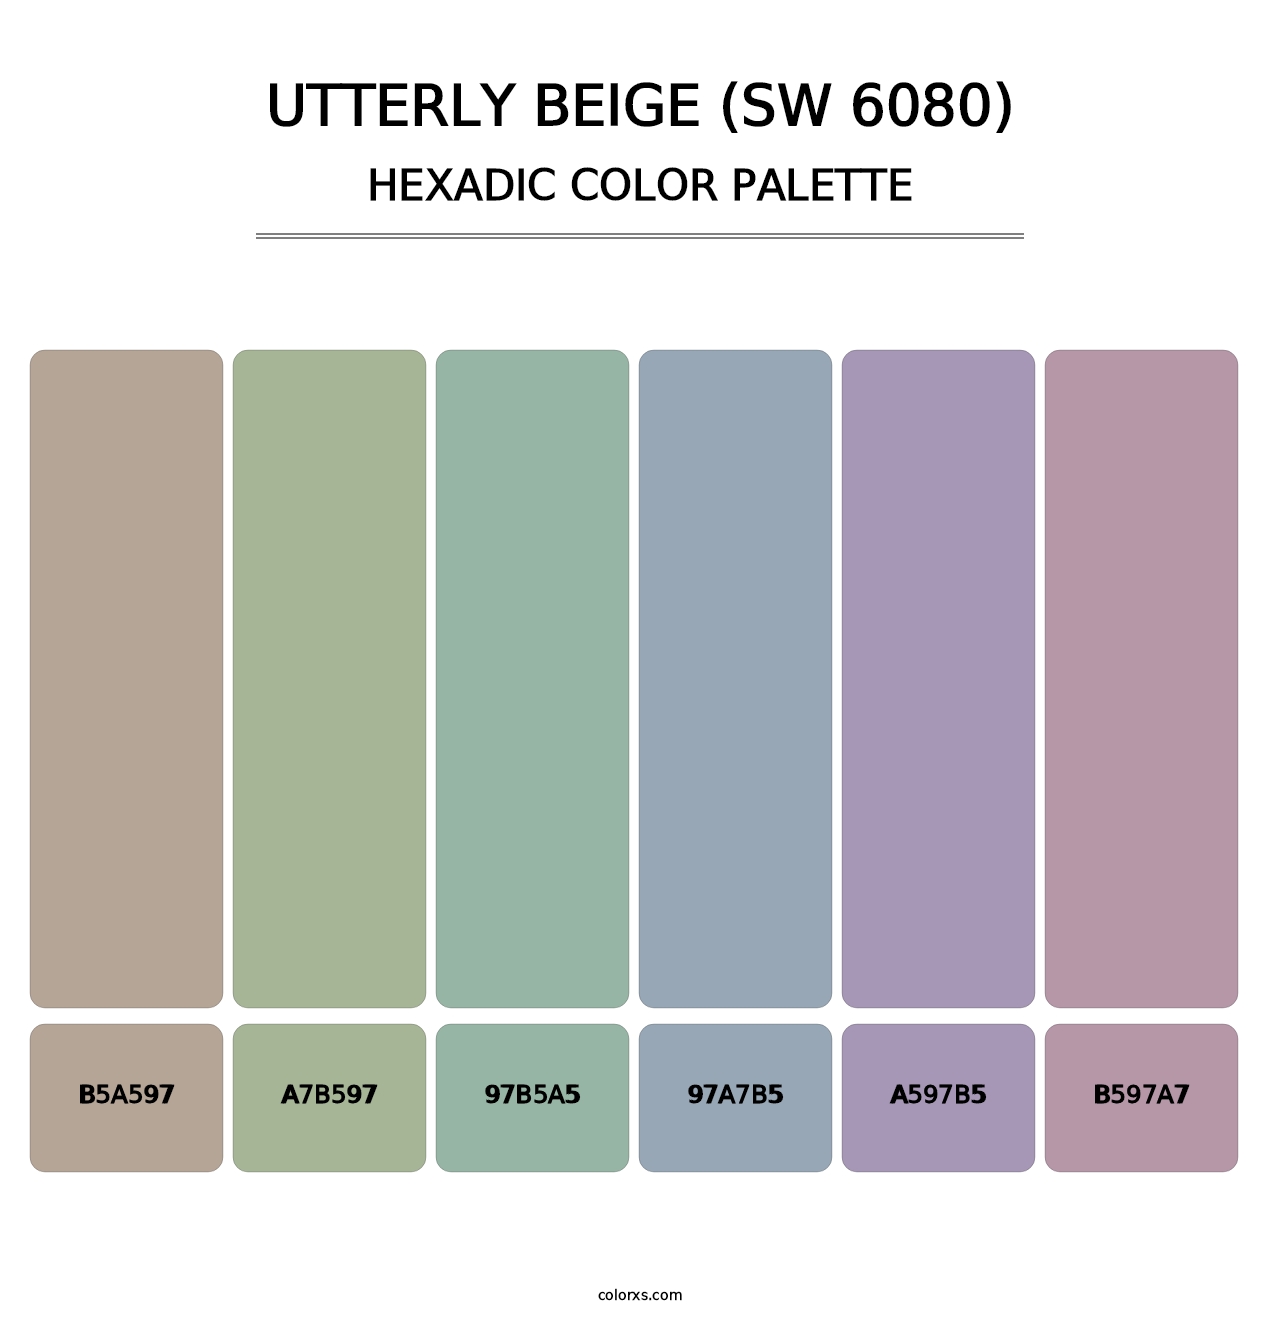 Utterly Beige (SW 6080) - Hexadic Color Palette